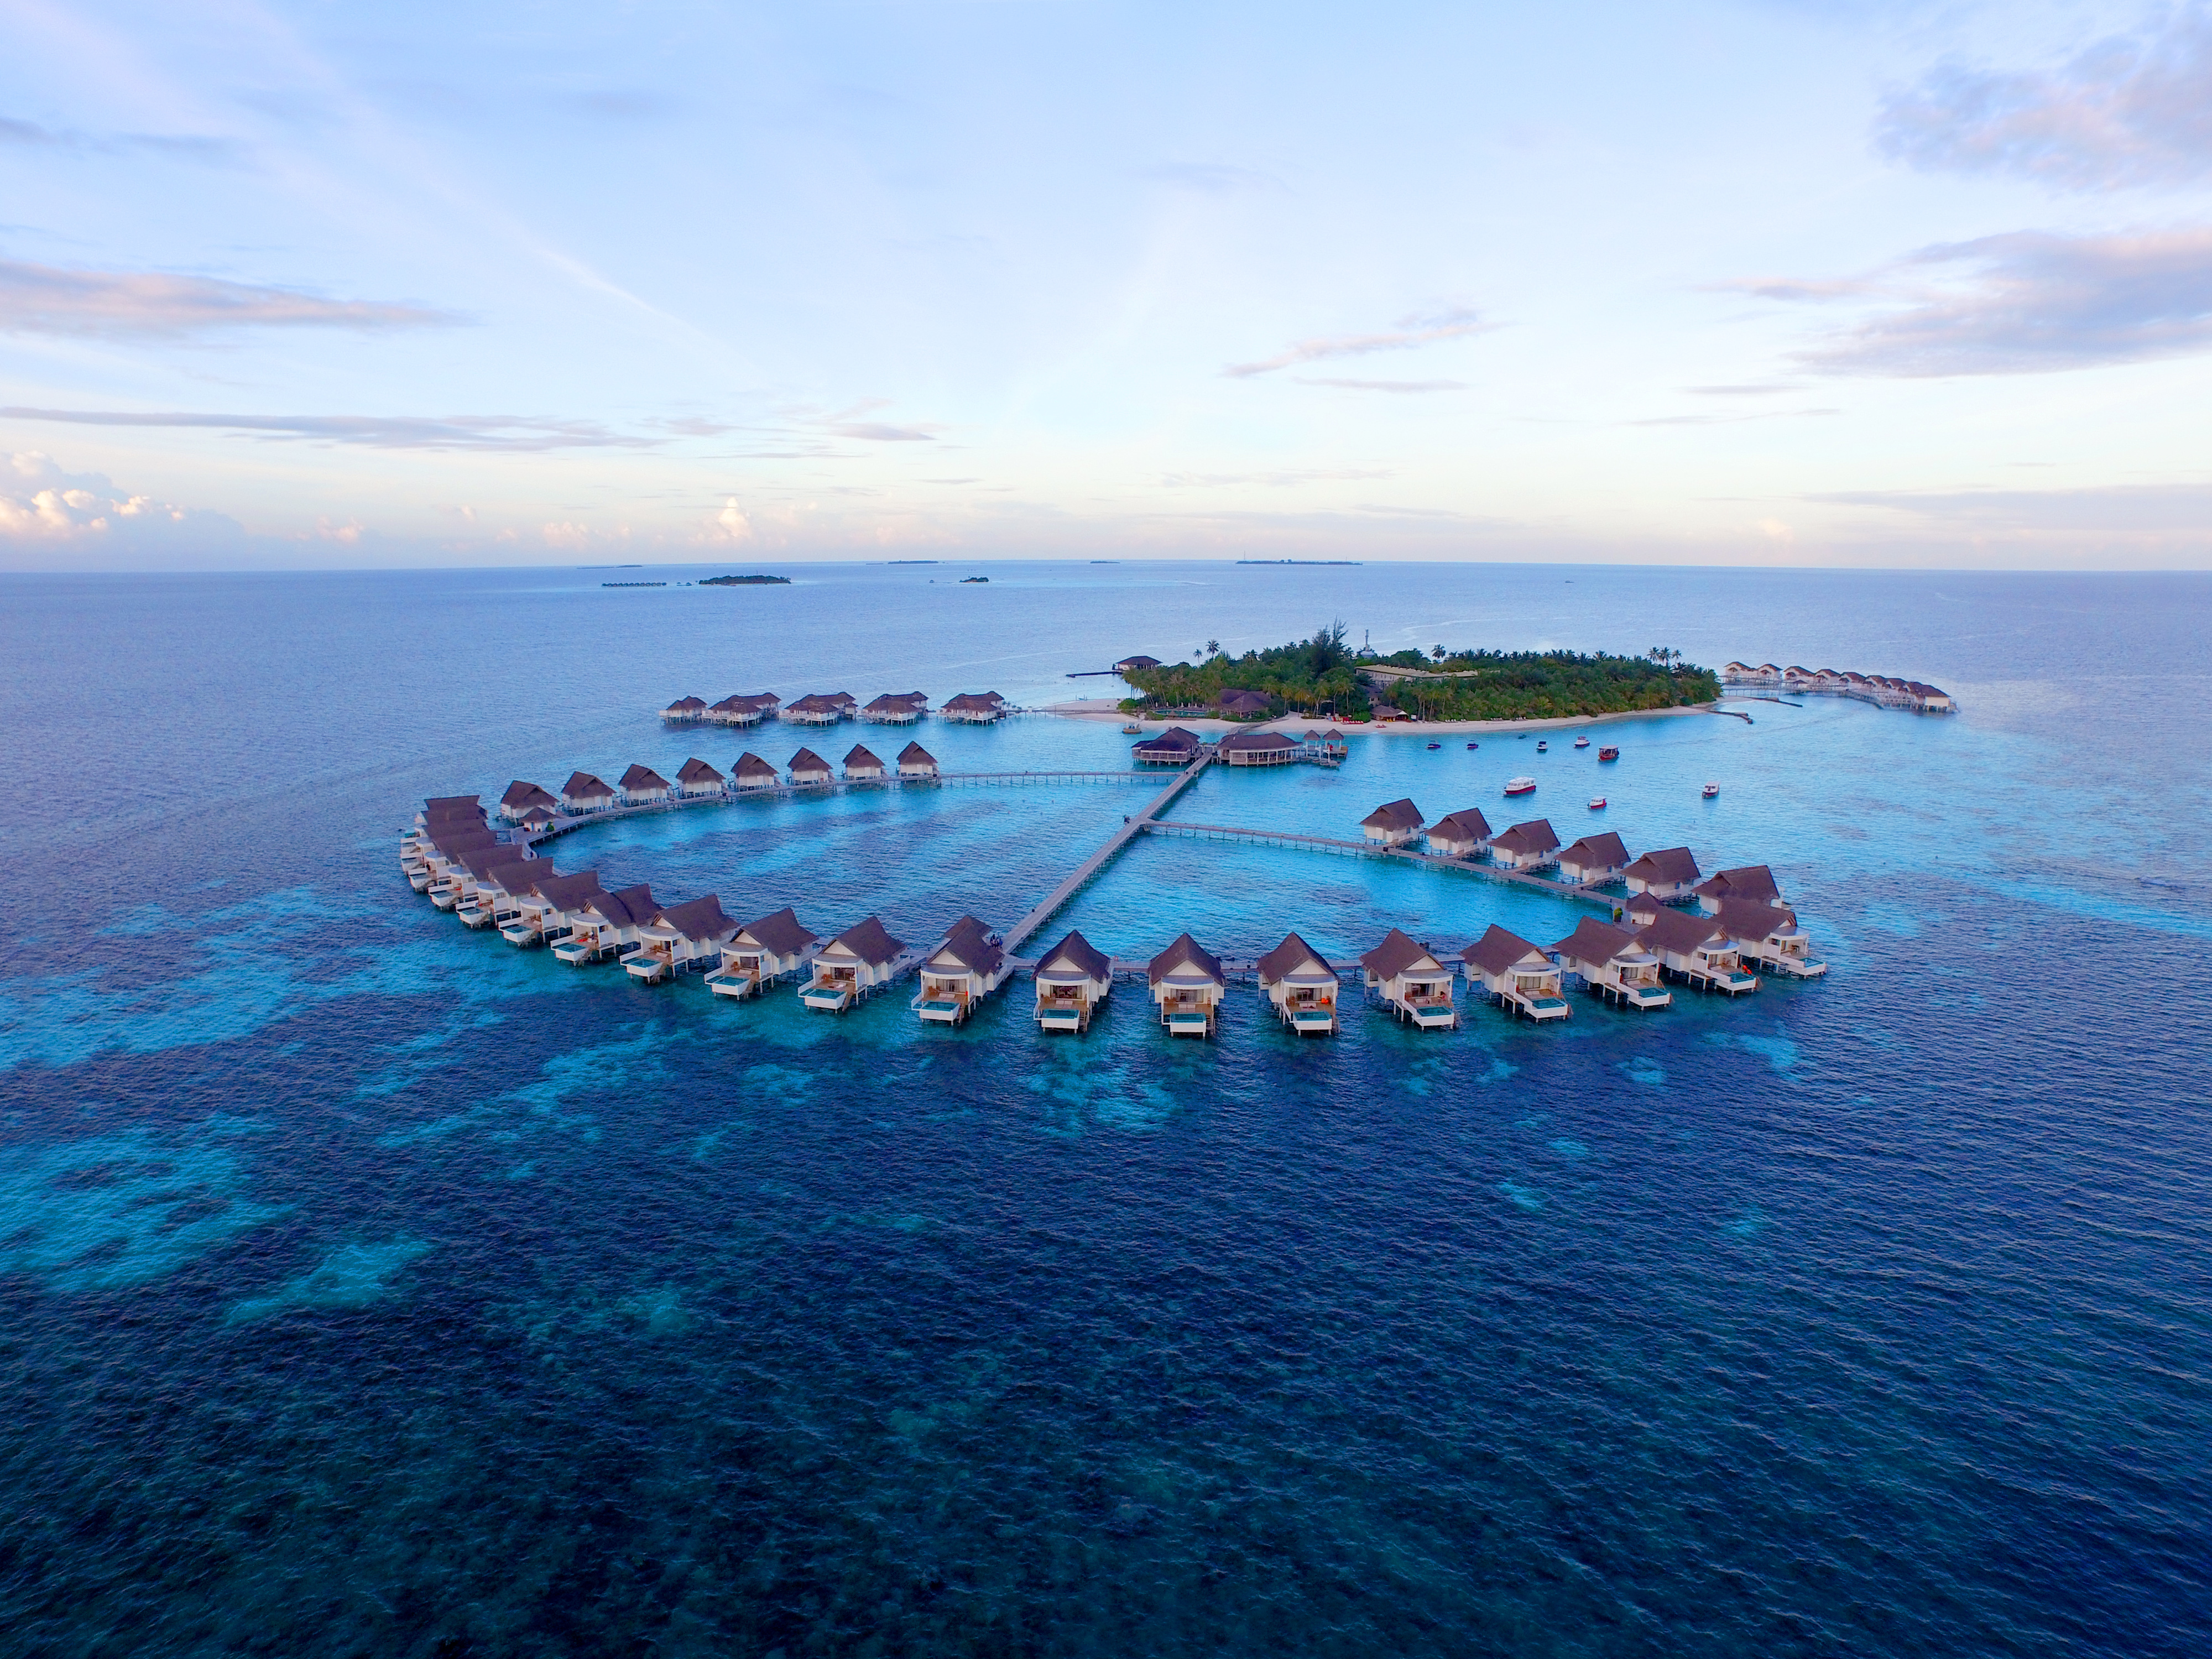 Island resort spa мальдивы. Centara Grand Island Resort Spa Maldives. Grand Island Resort & Spa Maldives 5*. Мальдивы Centara. Centara Grand Island Resort & Spa 5*.